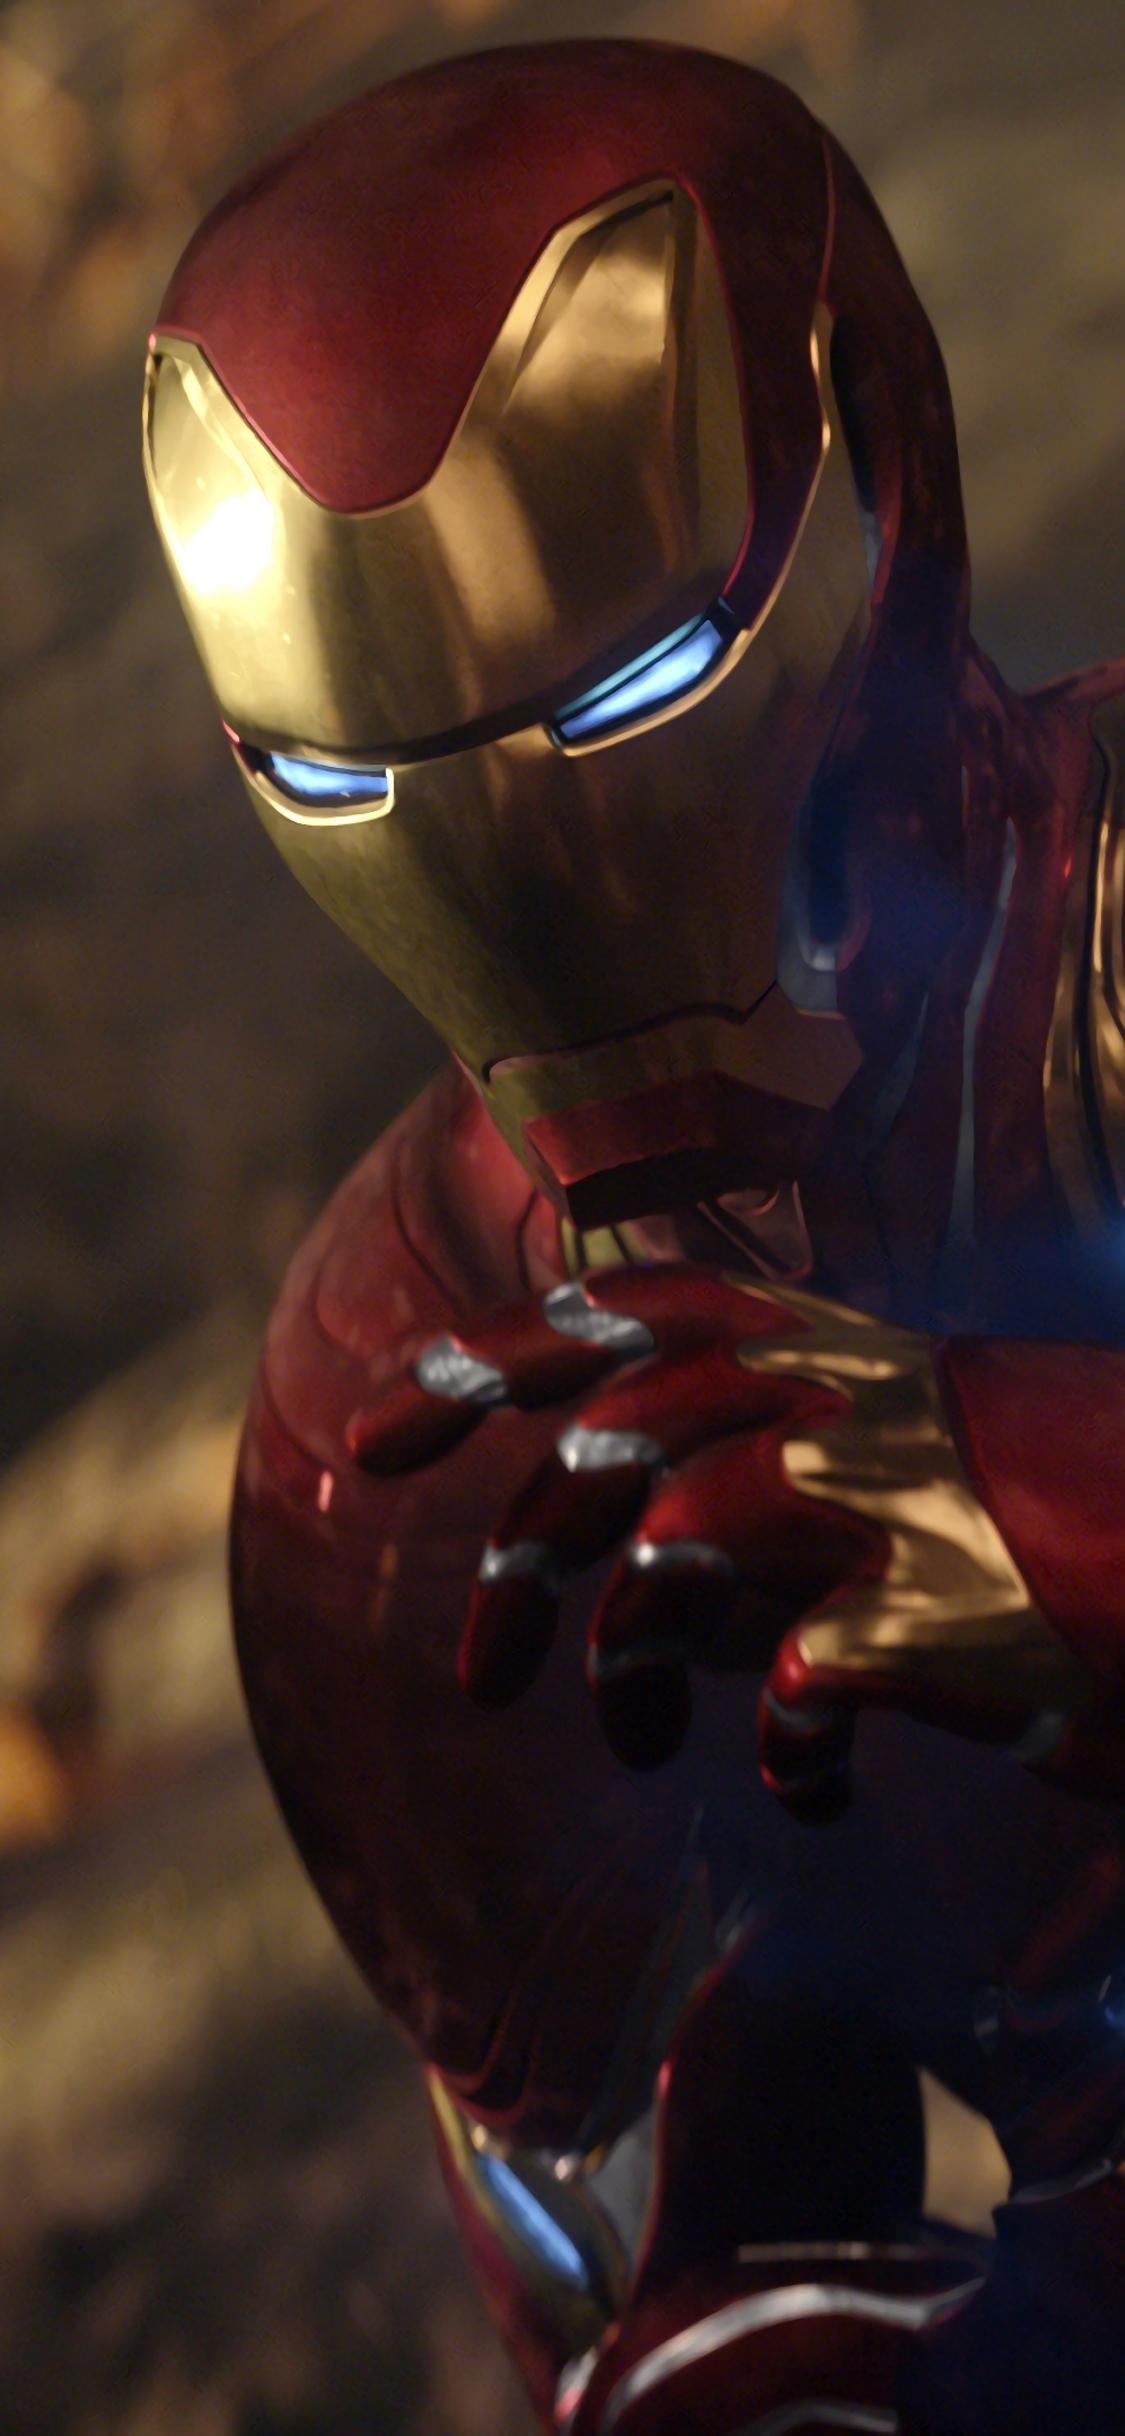 Avengers Infinity War Iron Man Marvel 4k iPhone XS